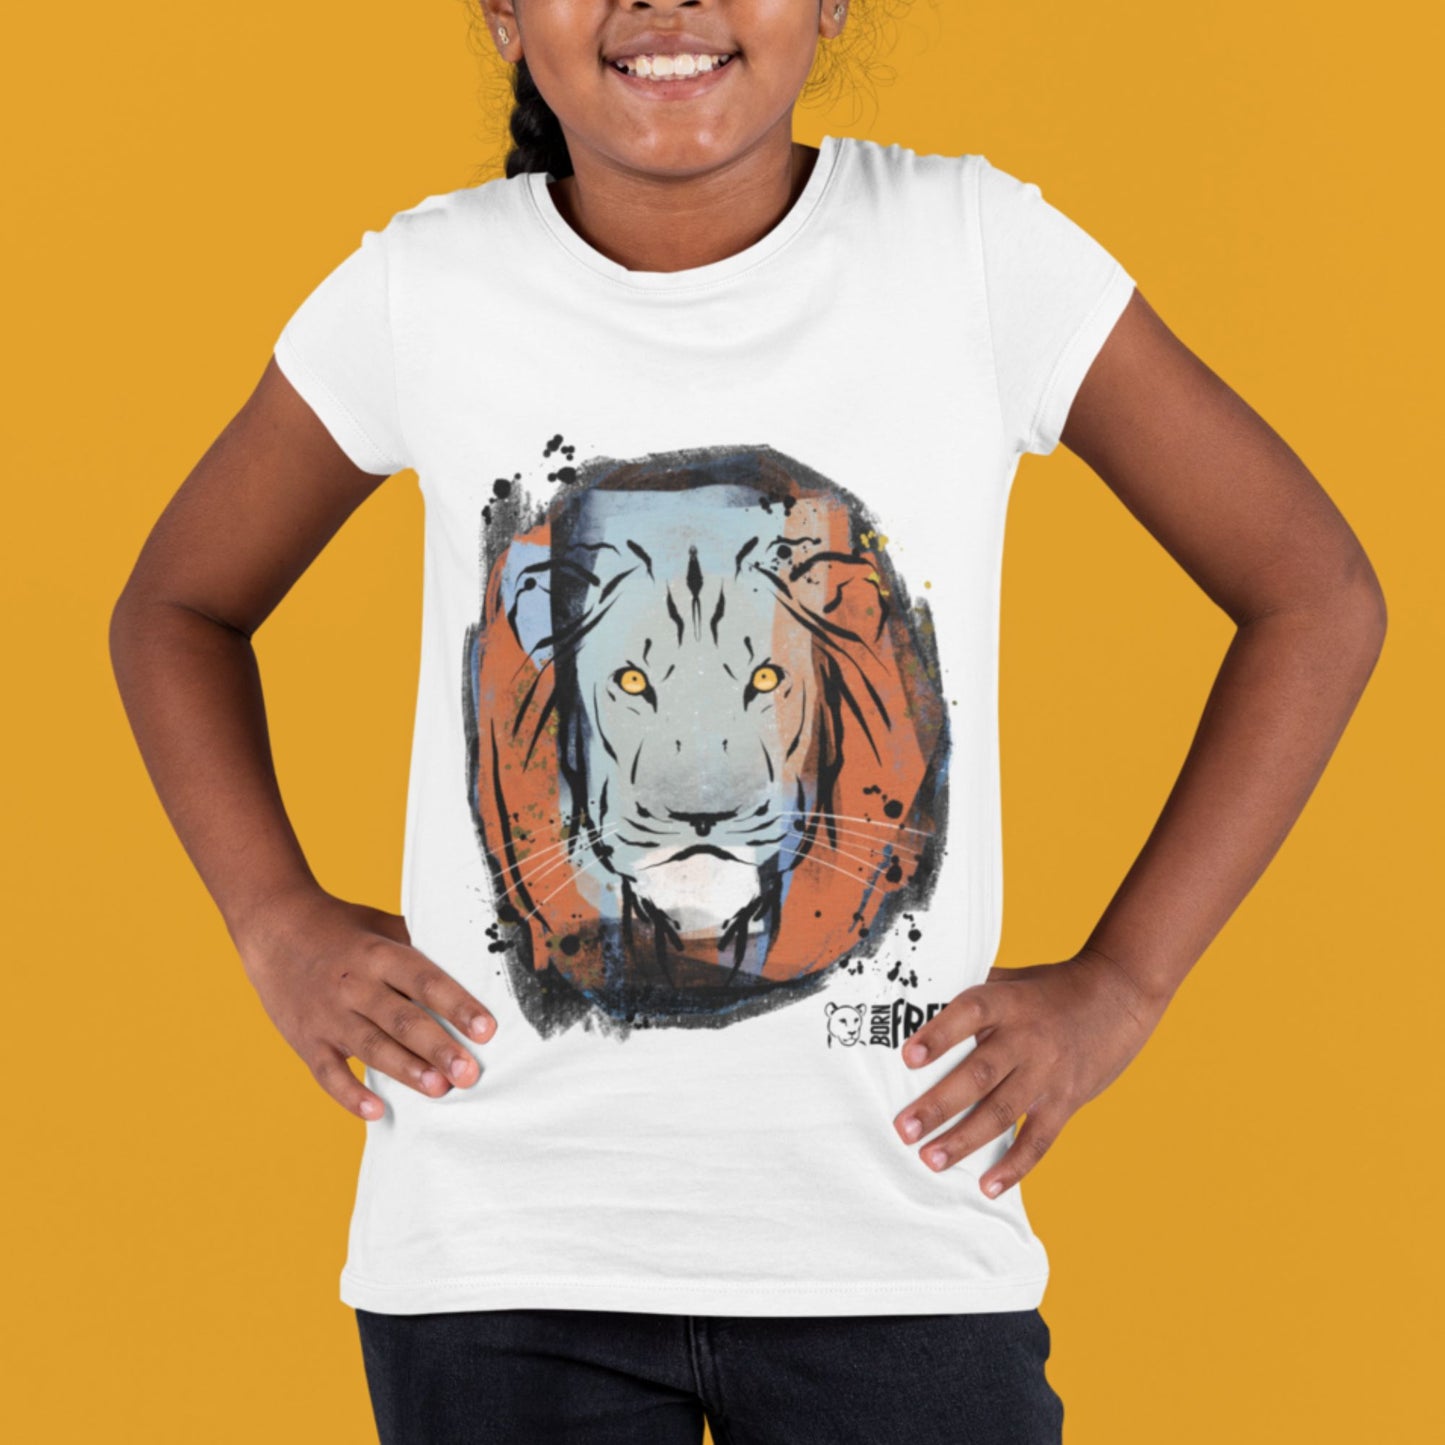 Born Free Lion T-Shirt